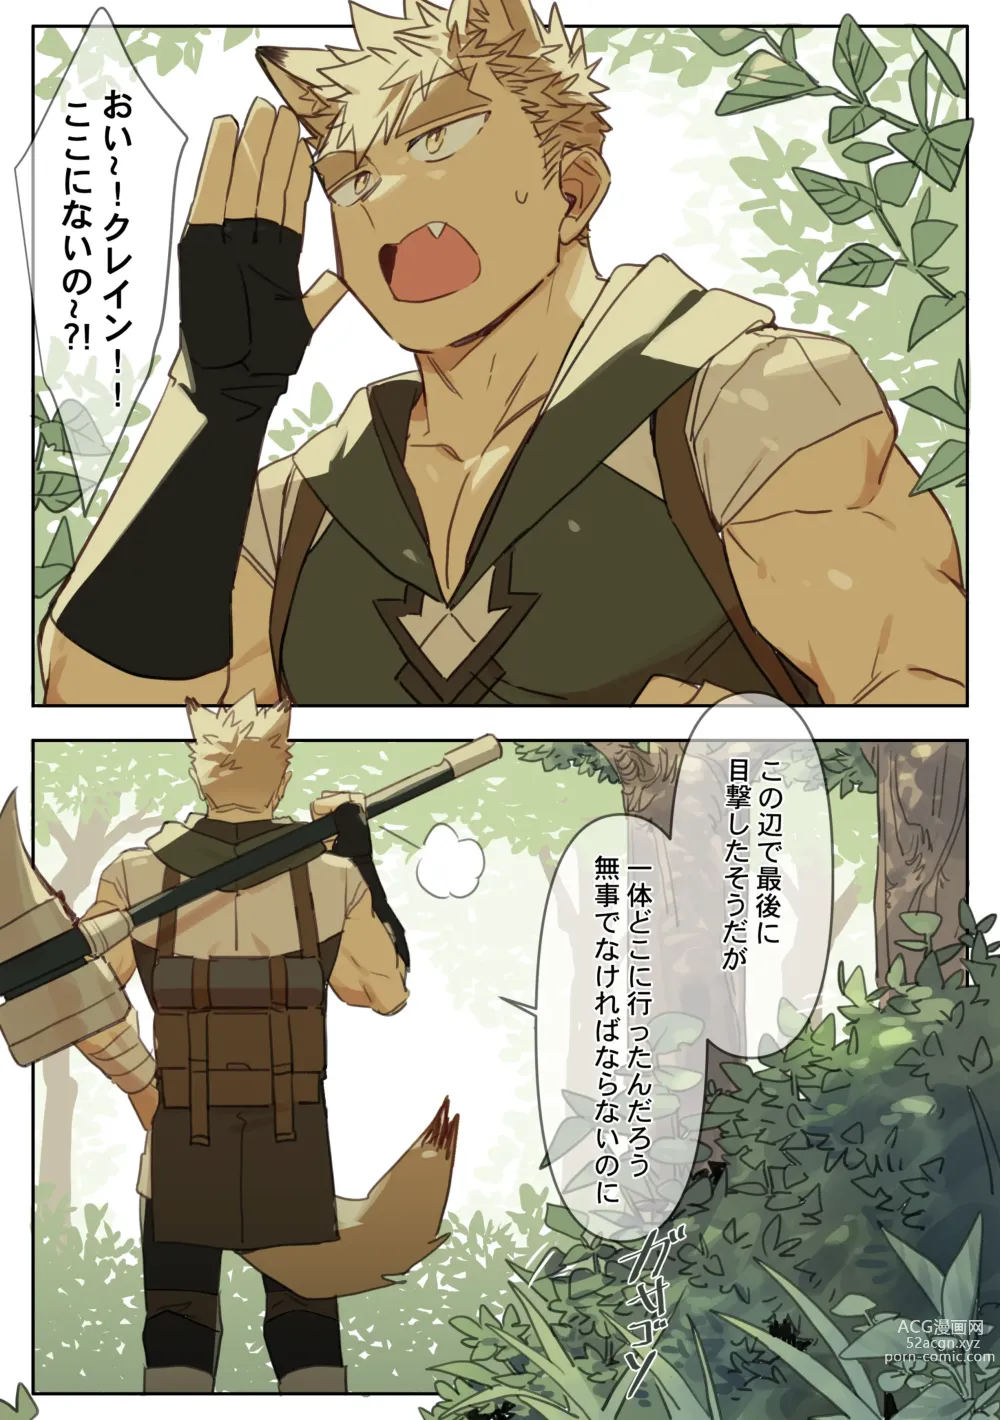 Page 1 of doujinshi 41 Orcs